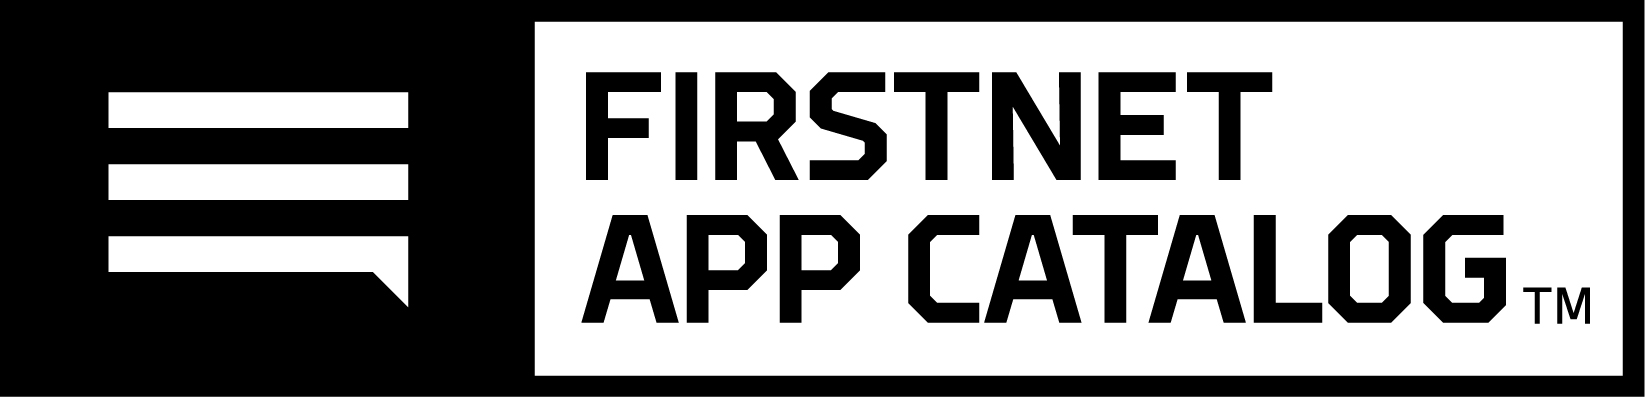 FirstNet App Catalog